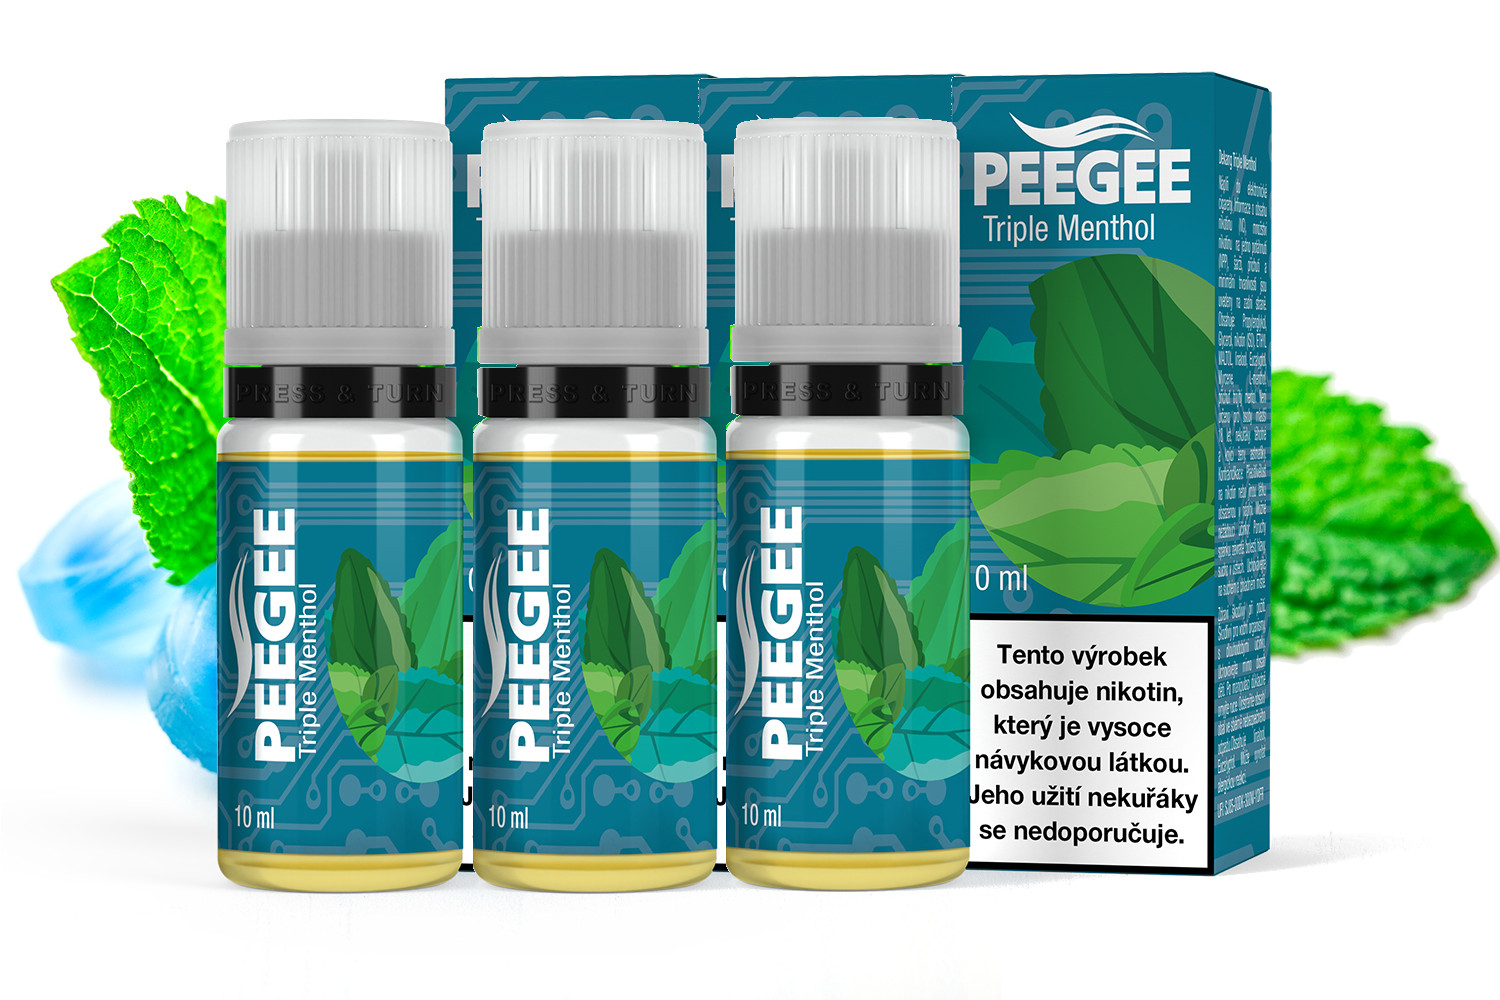 PEEGEE - Trojitý mentol (Triple Menthol) 3x10ml Obsah nikotinu: 12mg